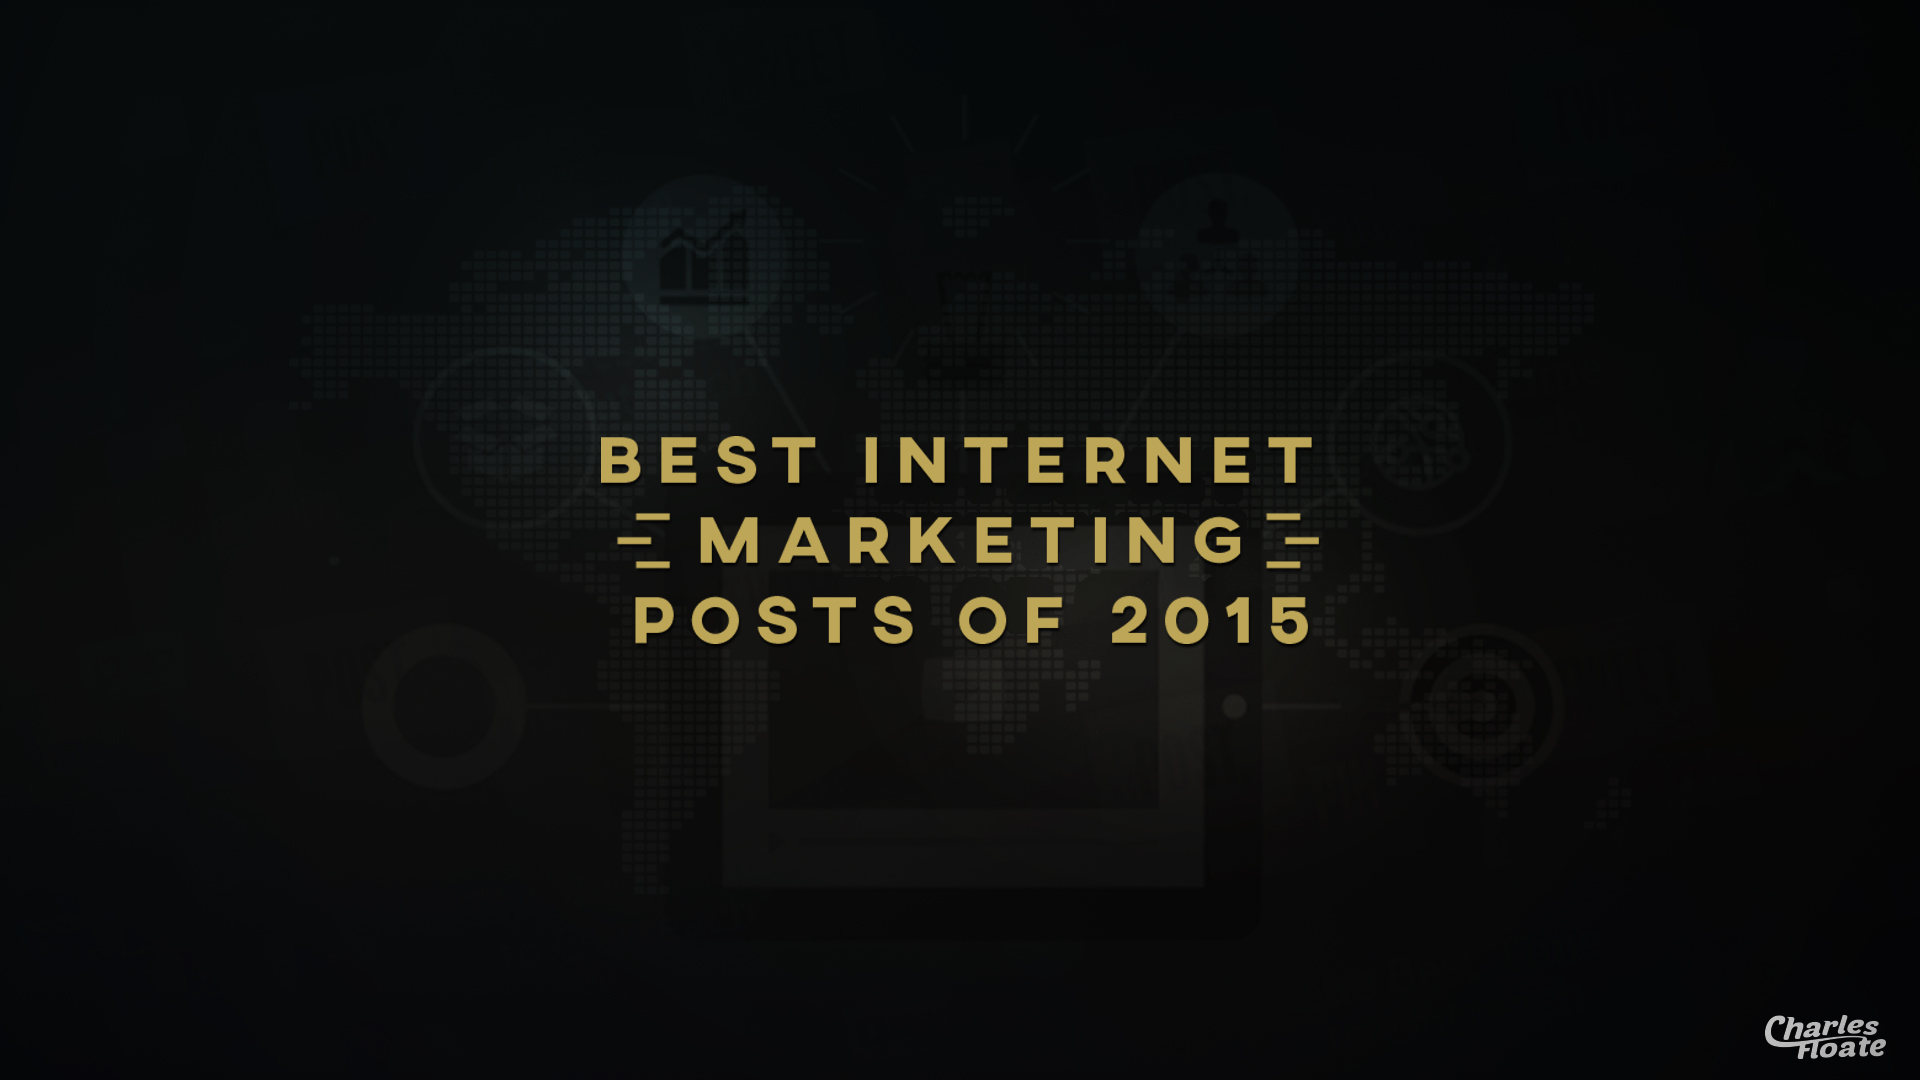 Best Internet Marketing Posts of 2015